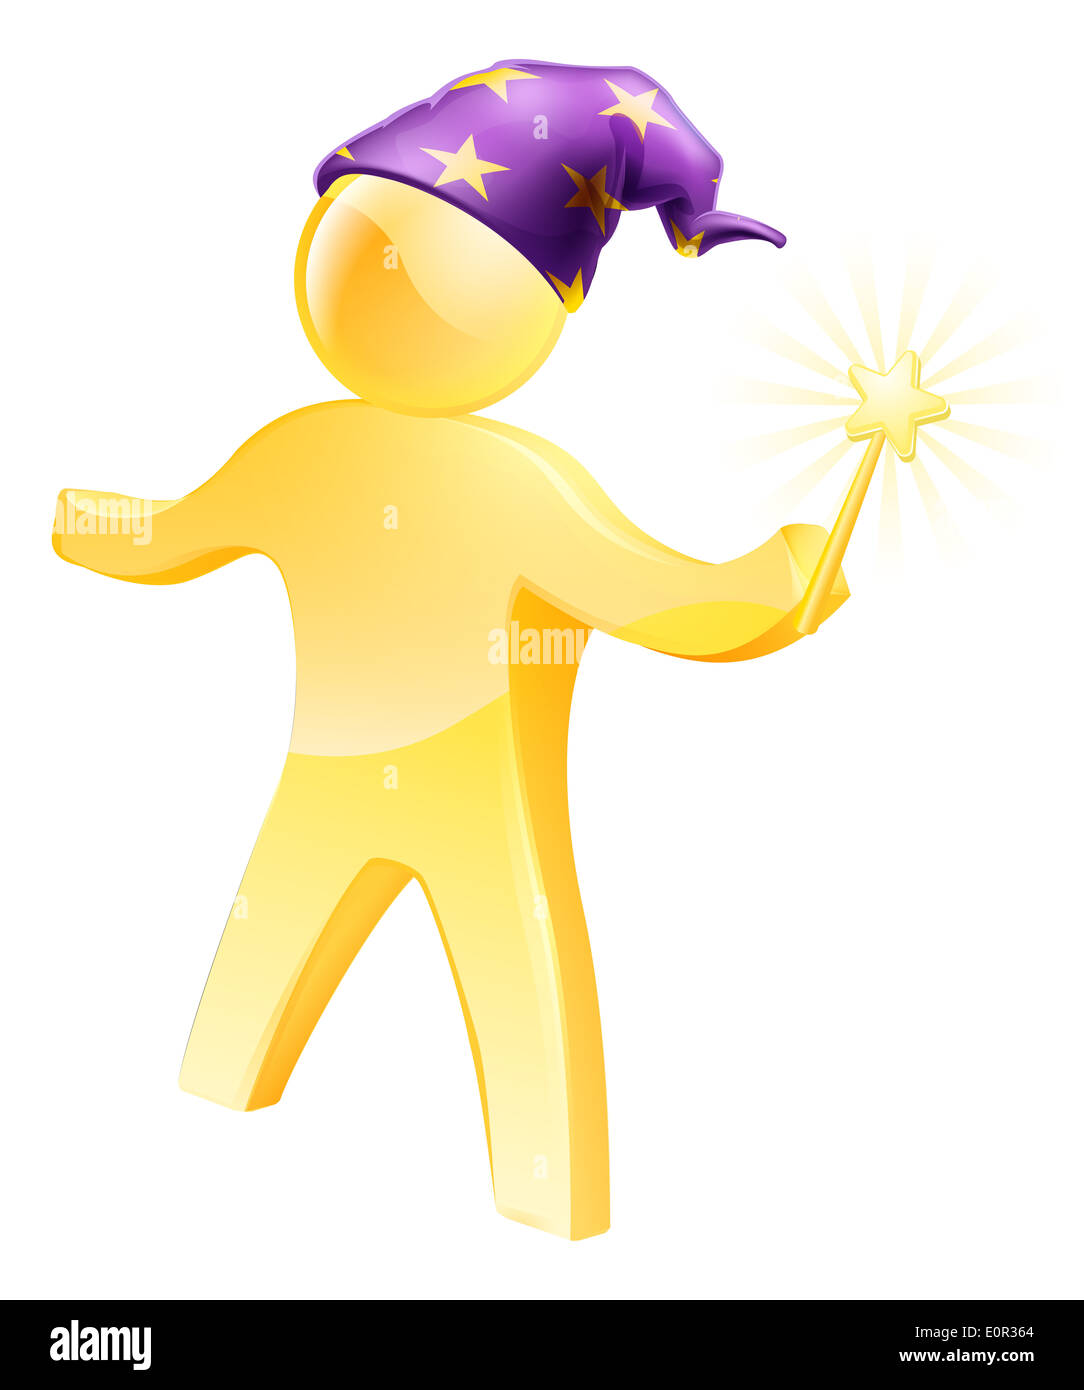 A gold wizard mascot waving a wand and wearing a purple hat Stock Photo